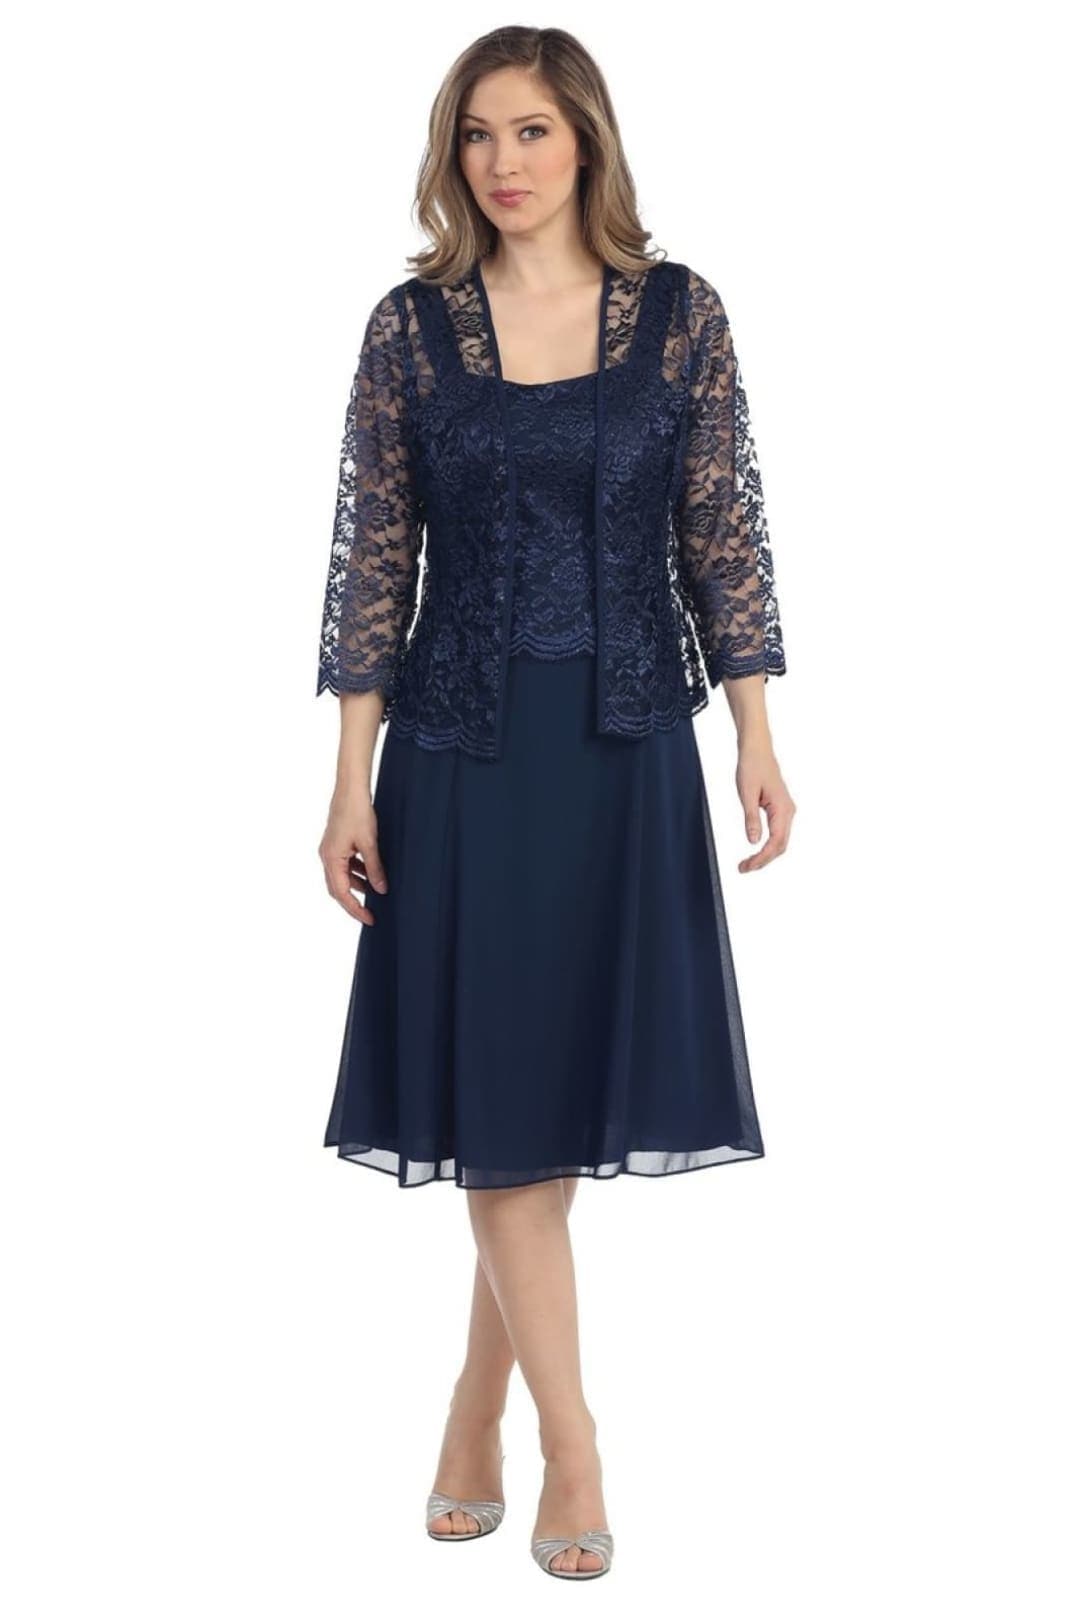 FINAL SALE! J&J Fashion 8485 Semi Formal Dress With Jacket - NAVY BLUE / L